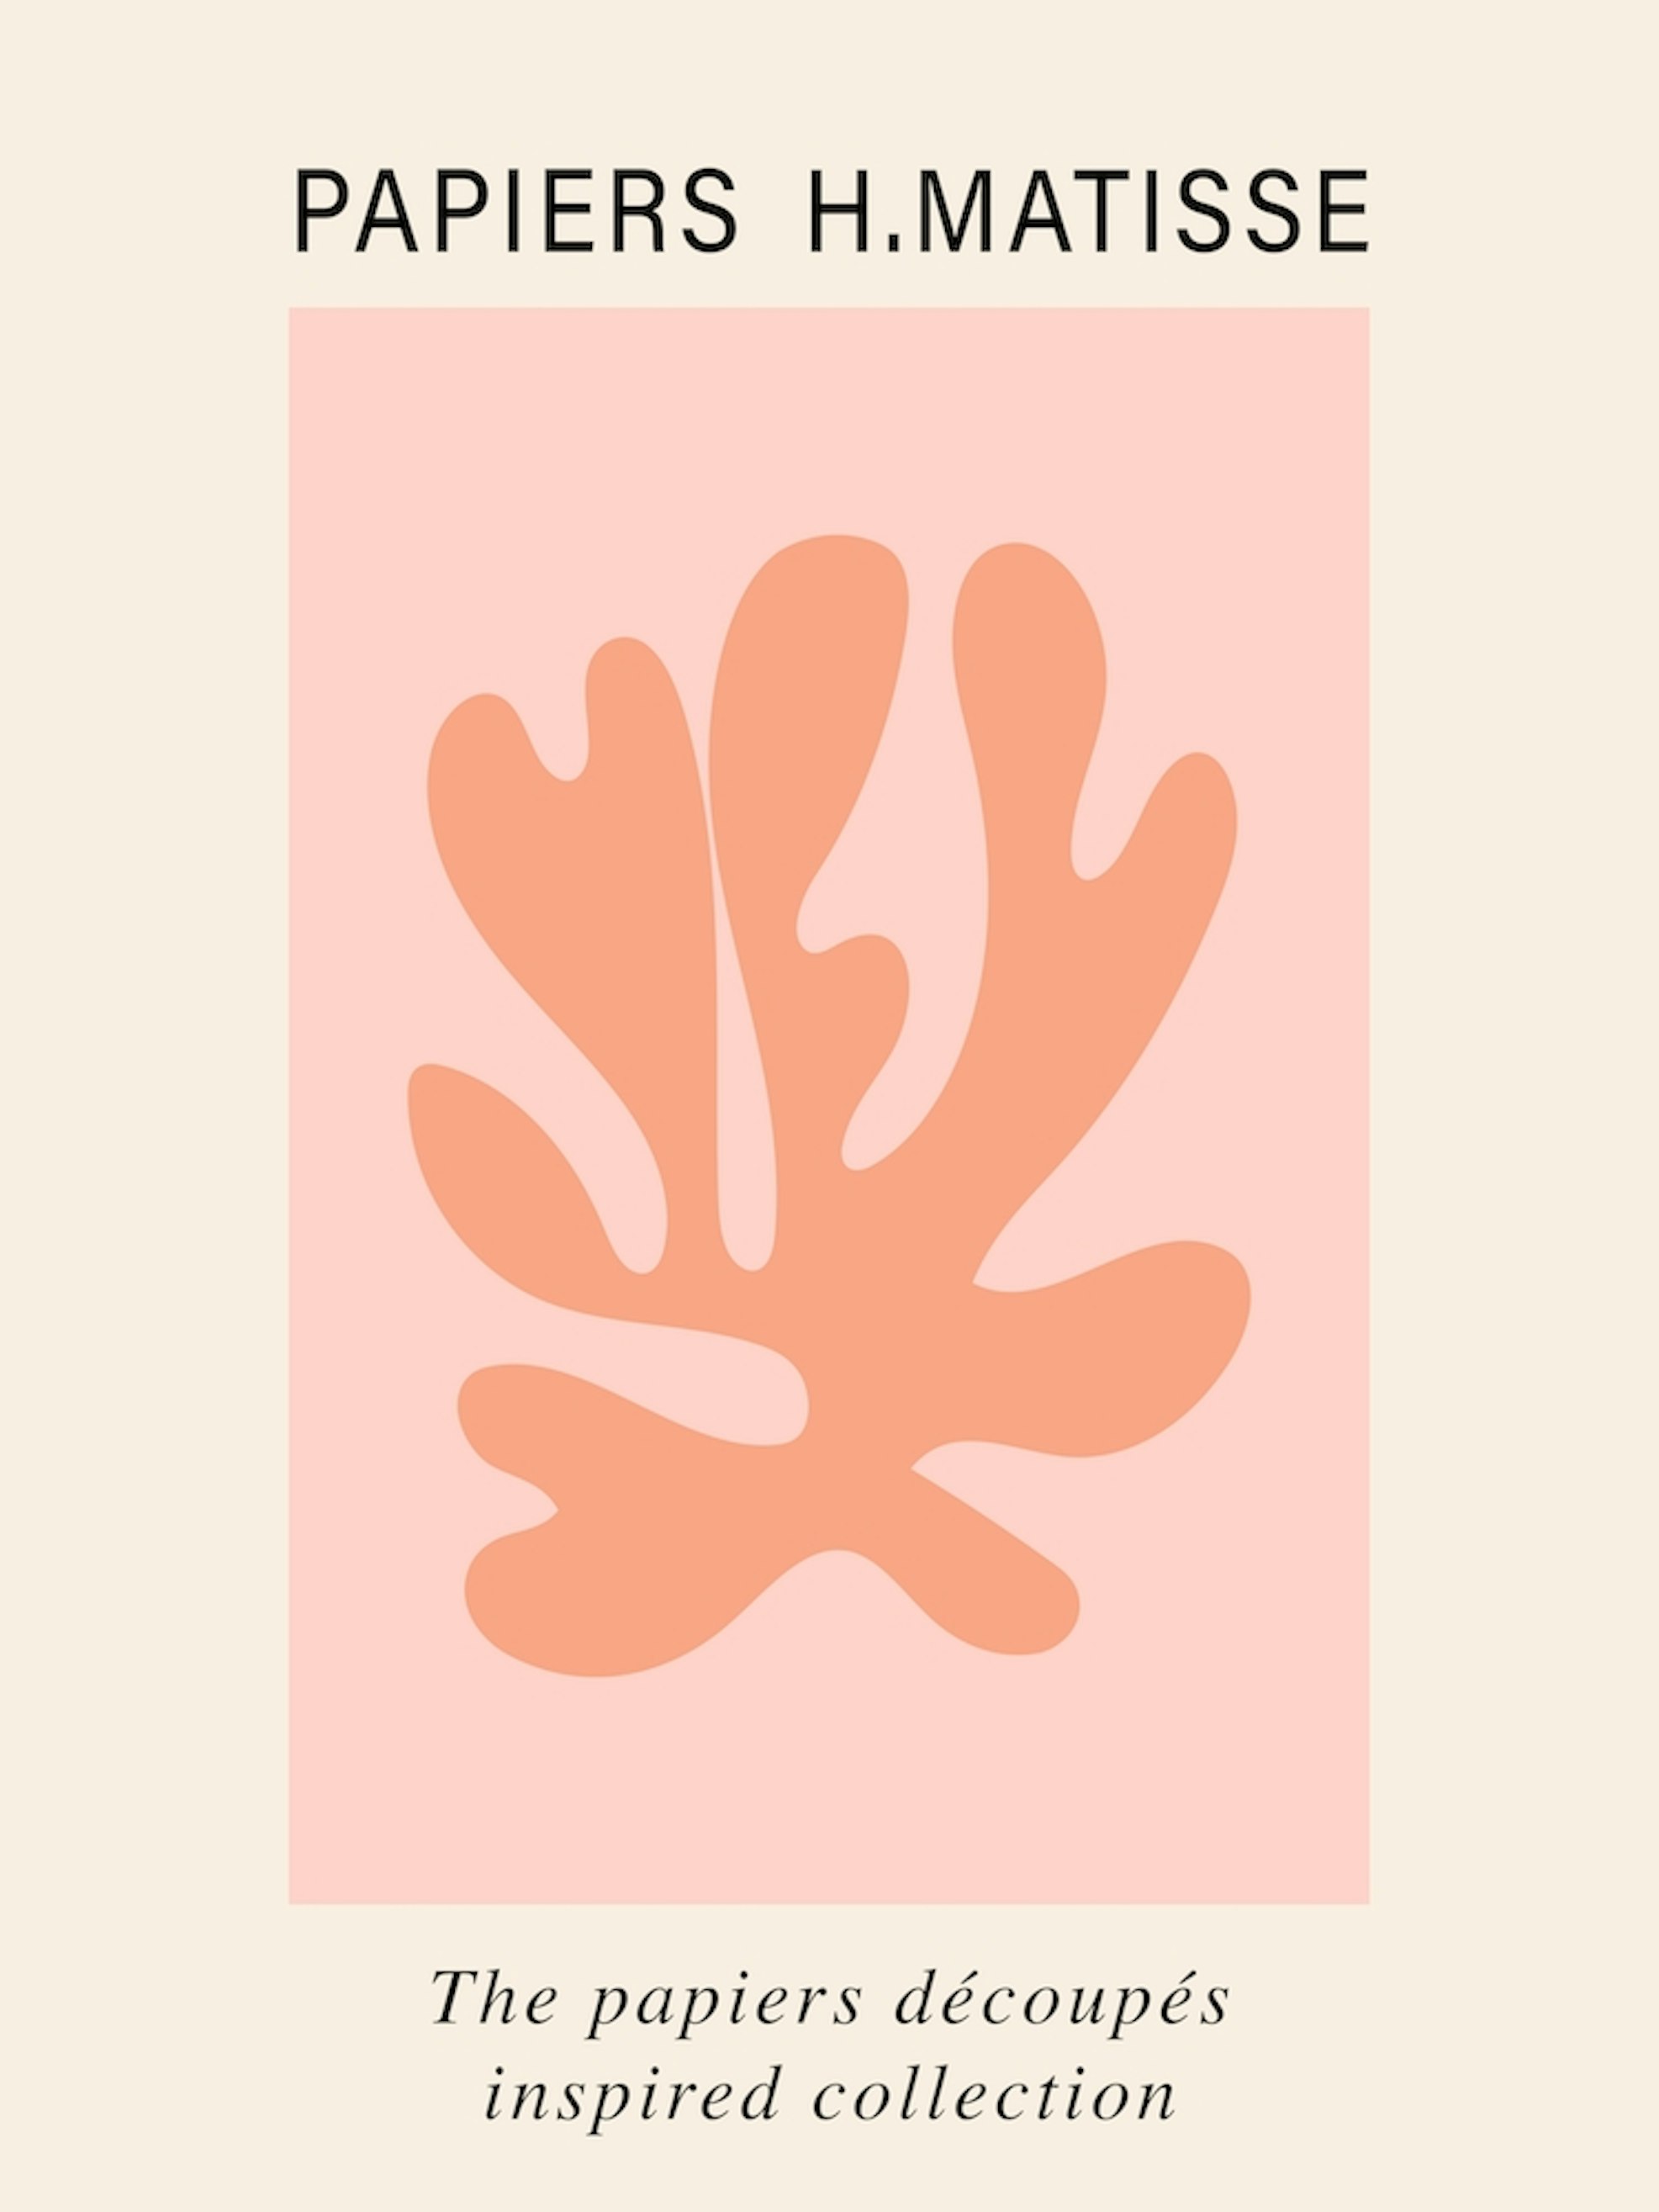 Outlook Krympe beundre Matisse Cutout Pink Orange Poster Wall Art Art Print by Mambo - Fy